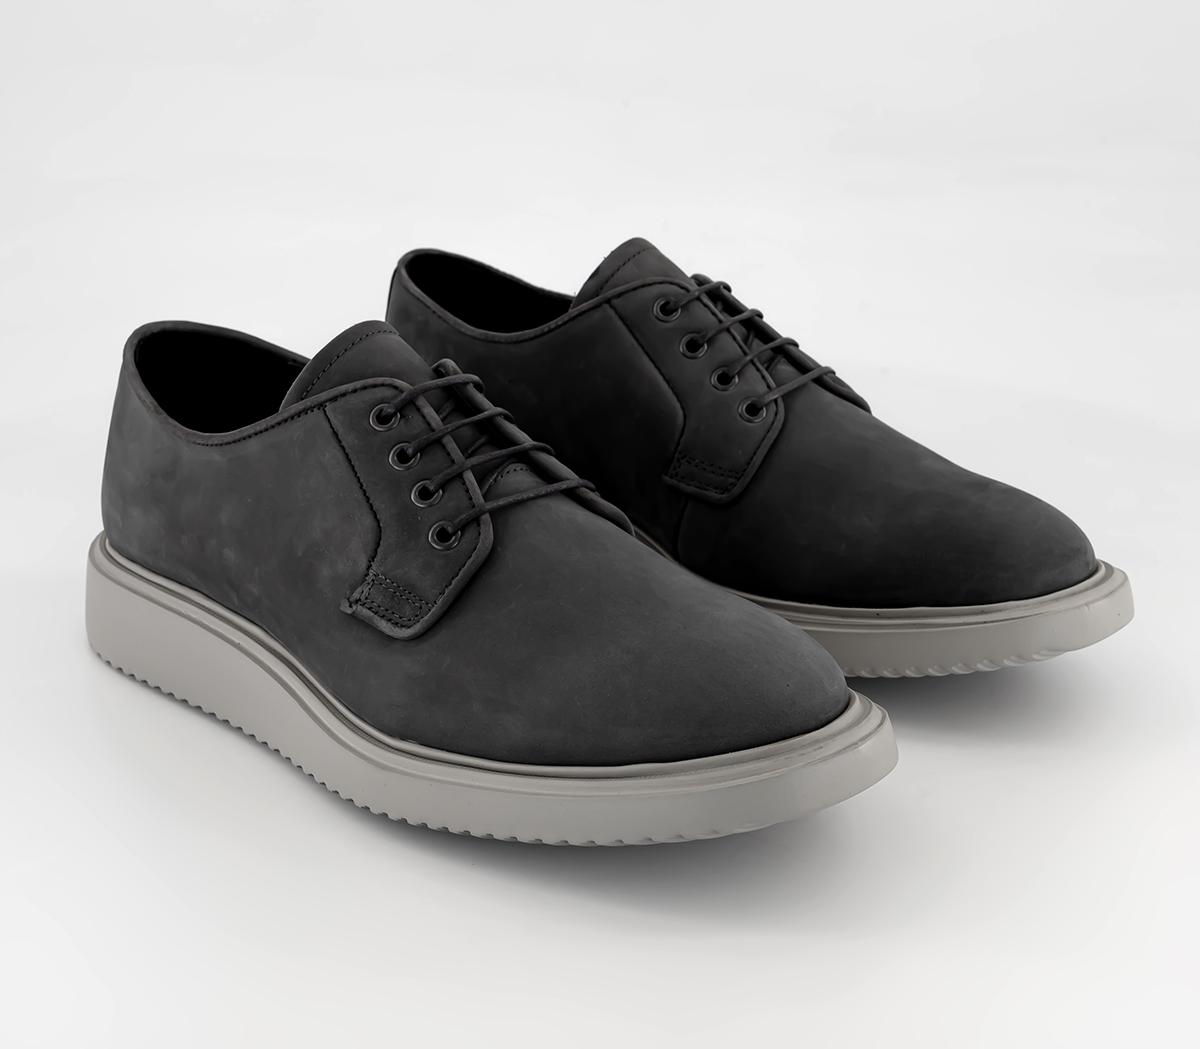 OFFICE Monty Gibson Wedge Formal Shoes Grey Nubuck - Men’s Smart Shoes